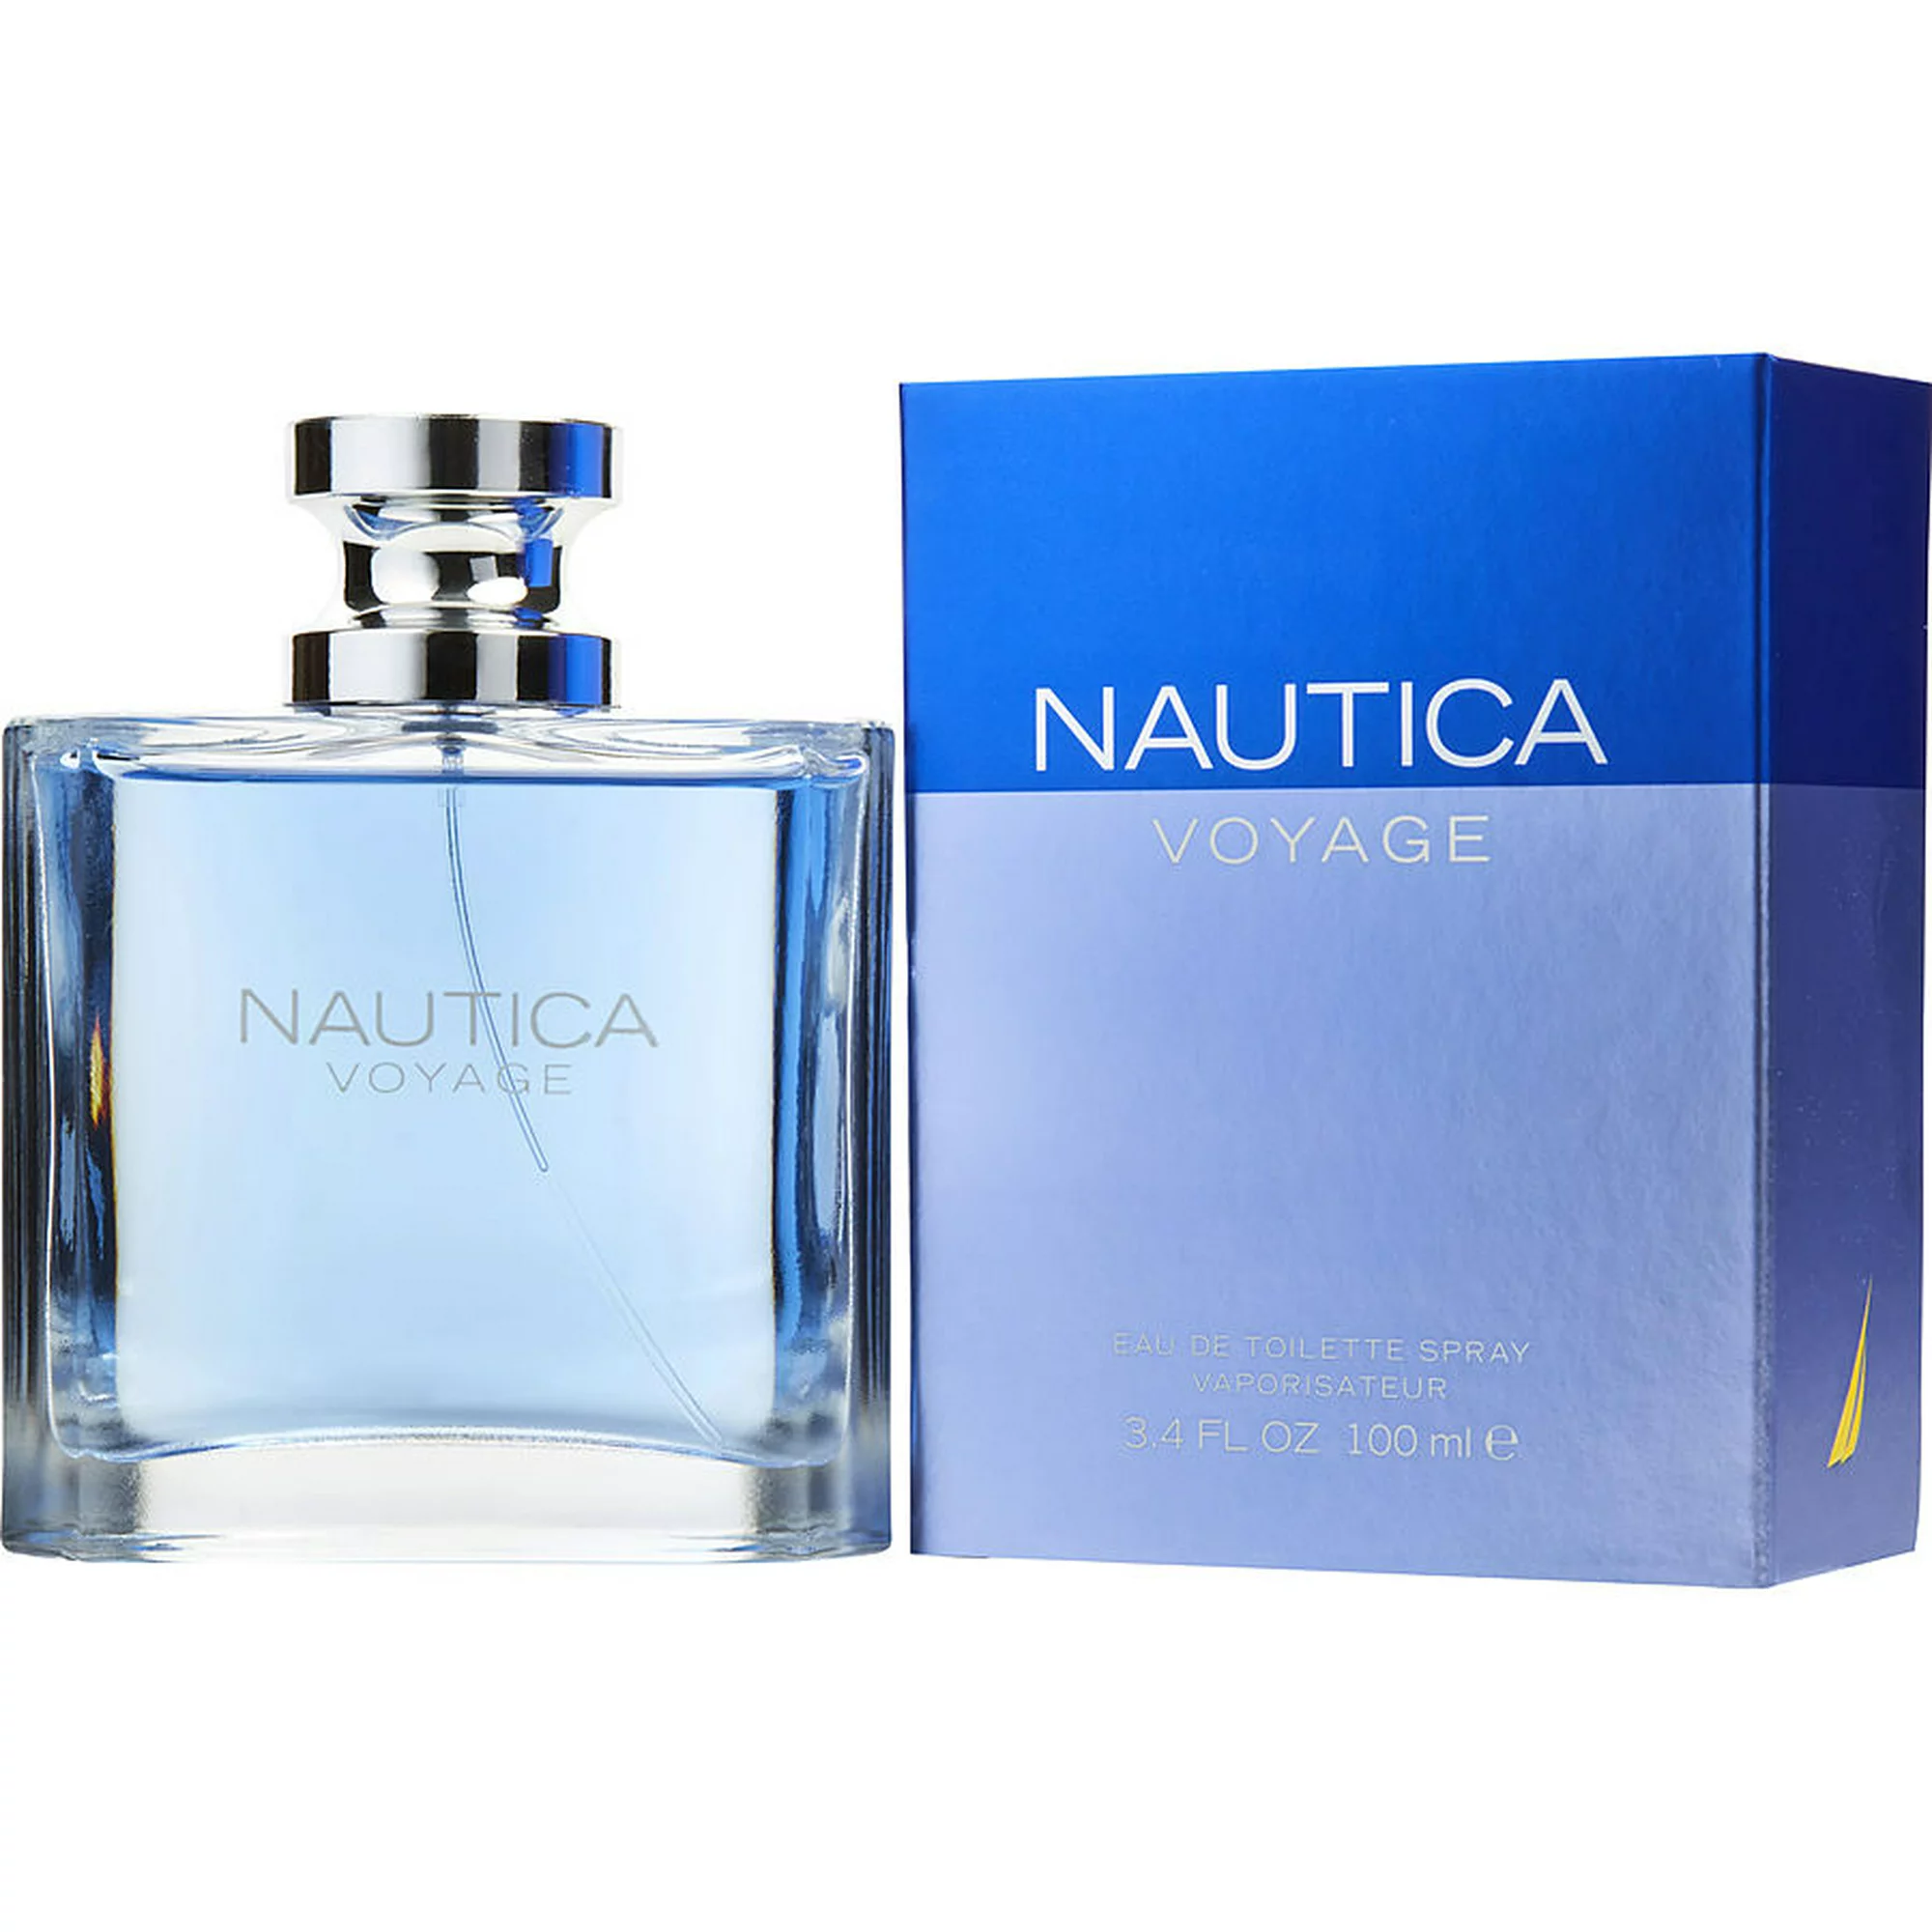 Imagen de Vendo perfume Nautica a $475 enviame whatsapp al <a href="https://wa.me/524492153532" target="_blank">https://wa.me/524492153532</a>